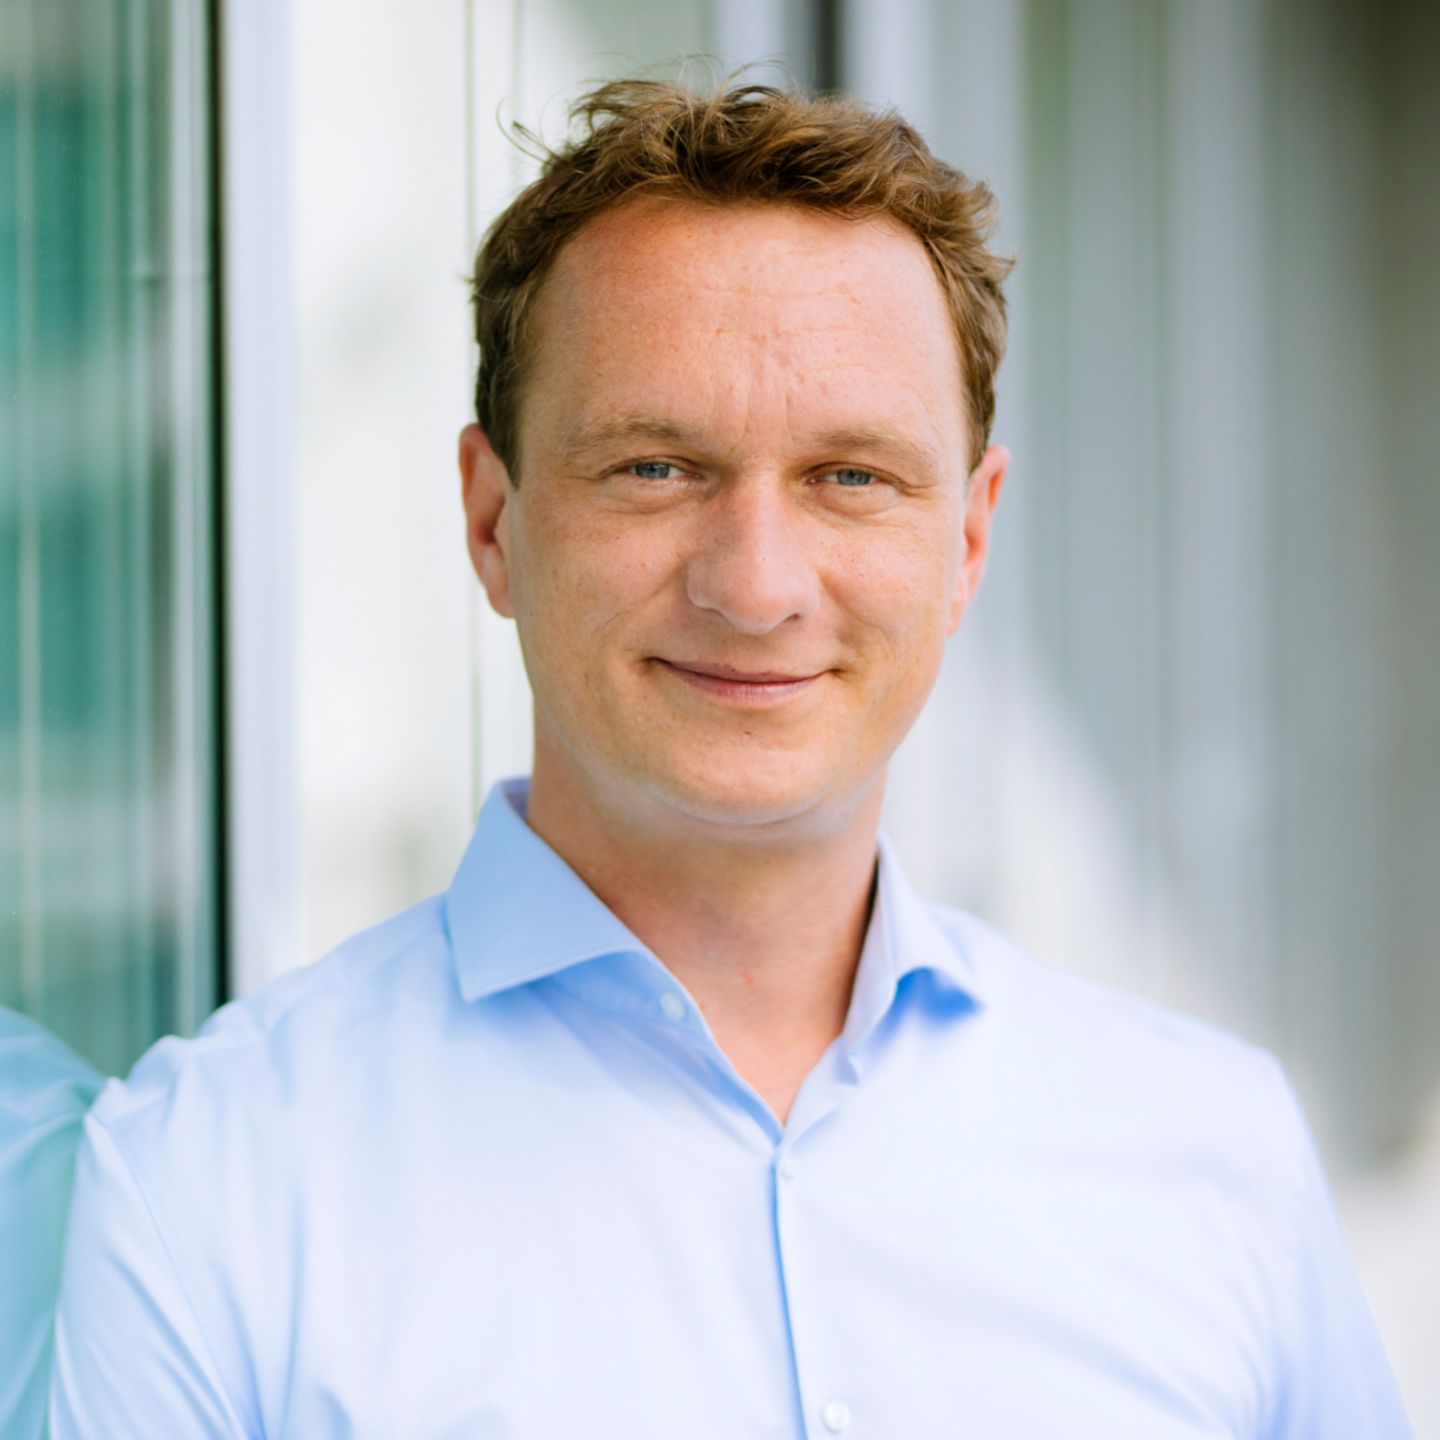 Datenschutz im Inkasso: Stephan Bovermann, Datenschützer bei EOS